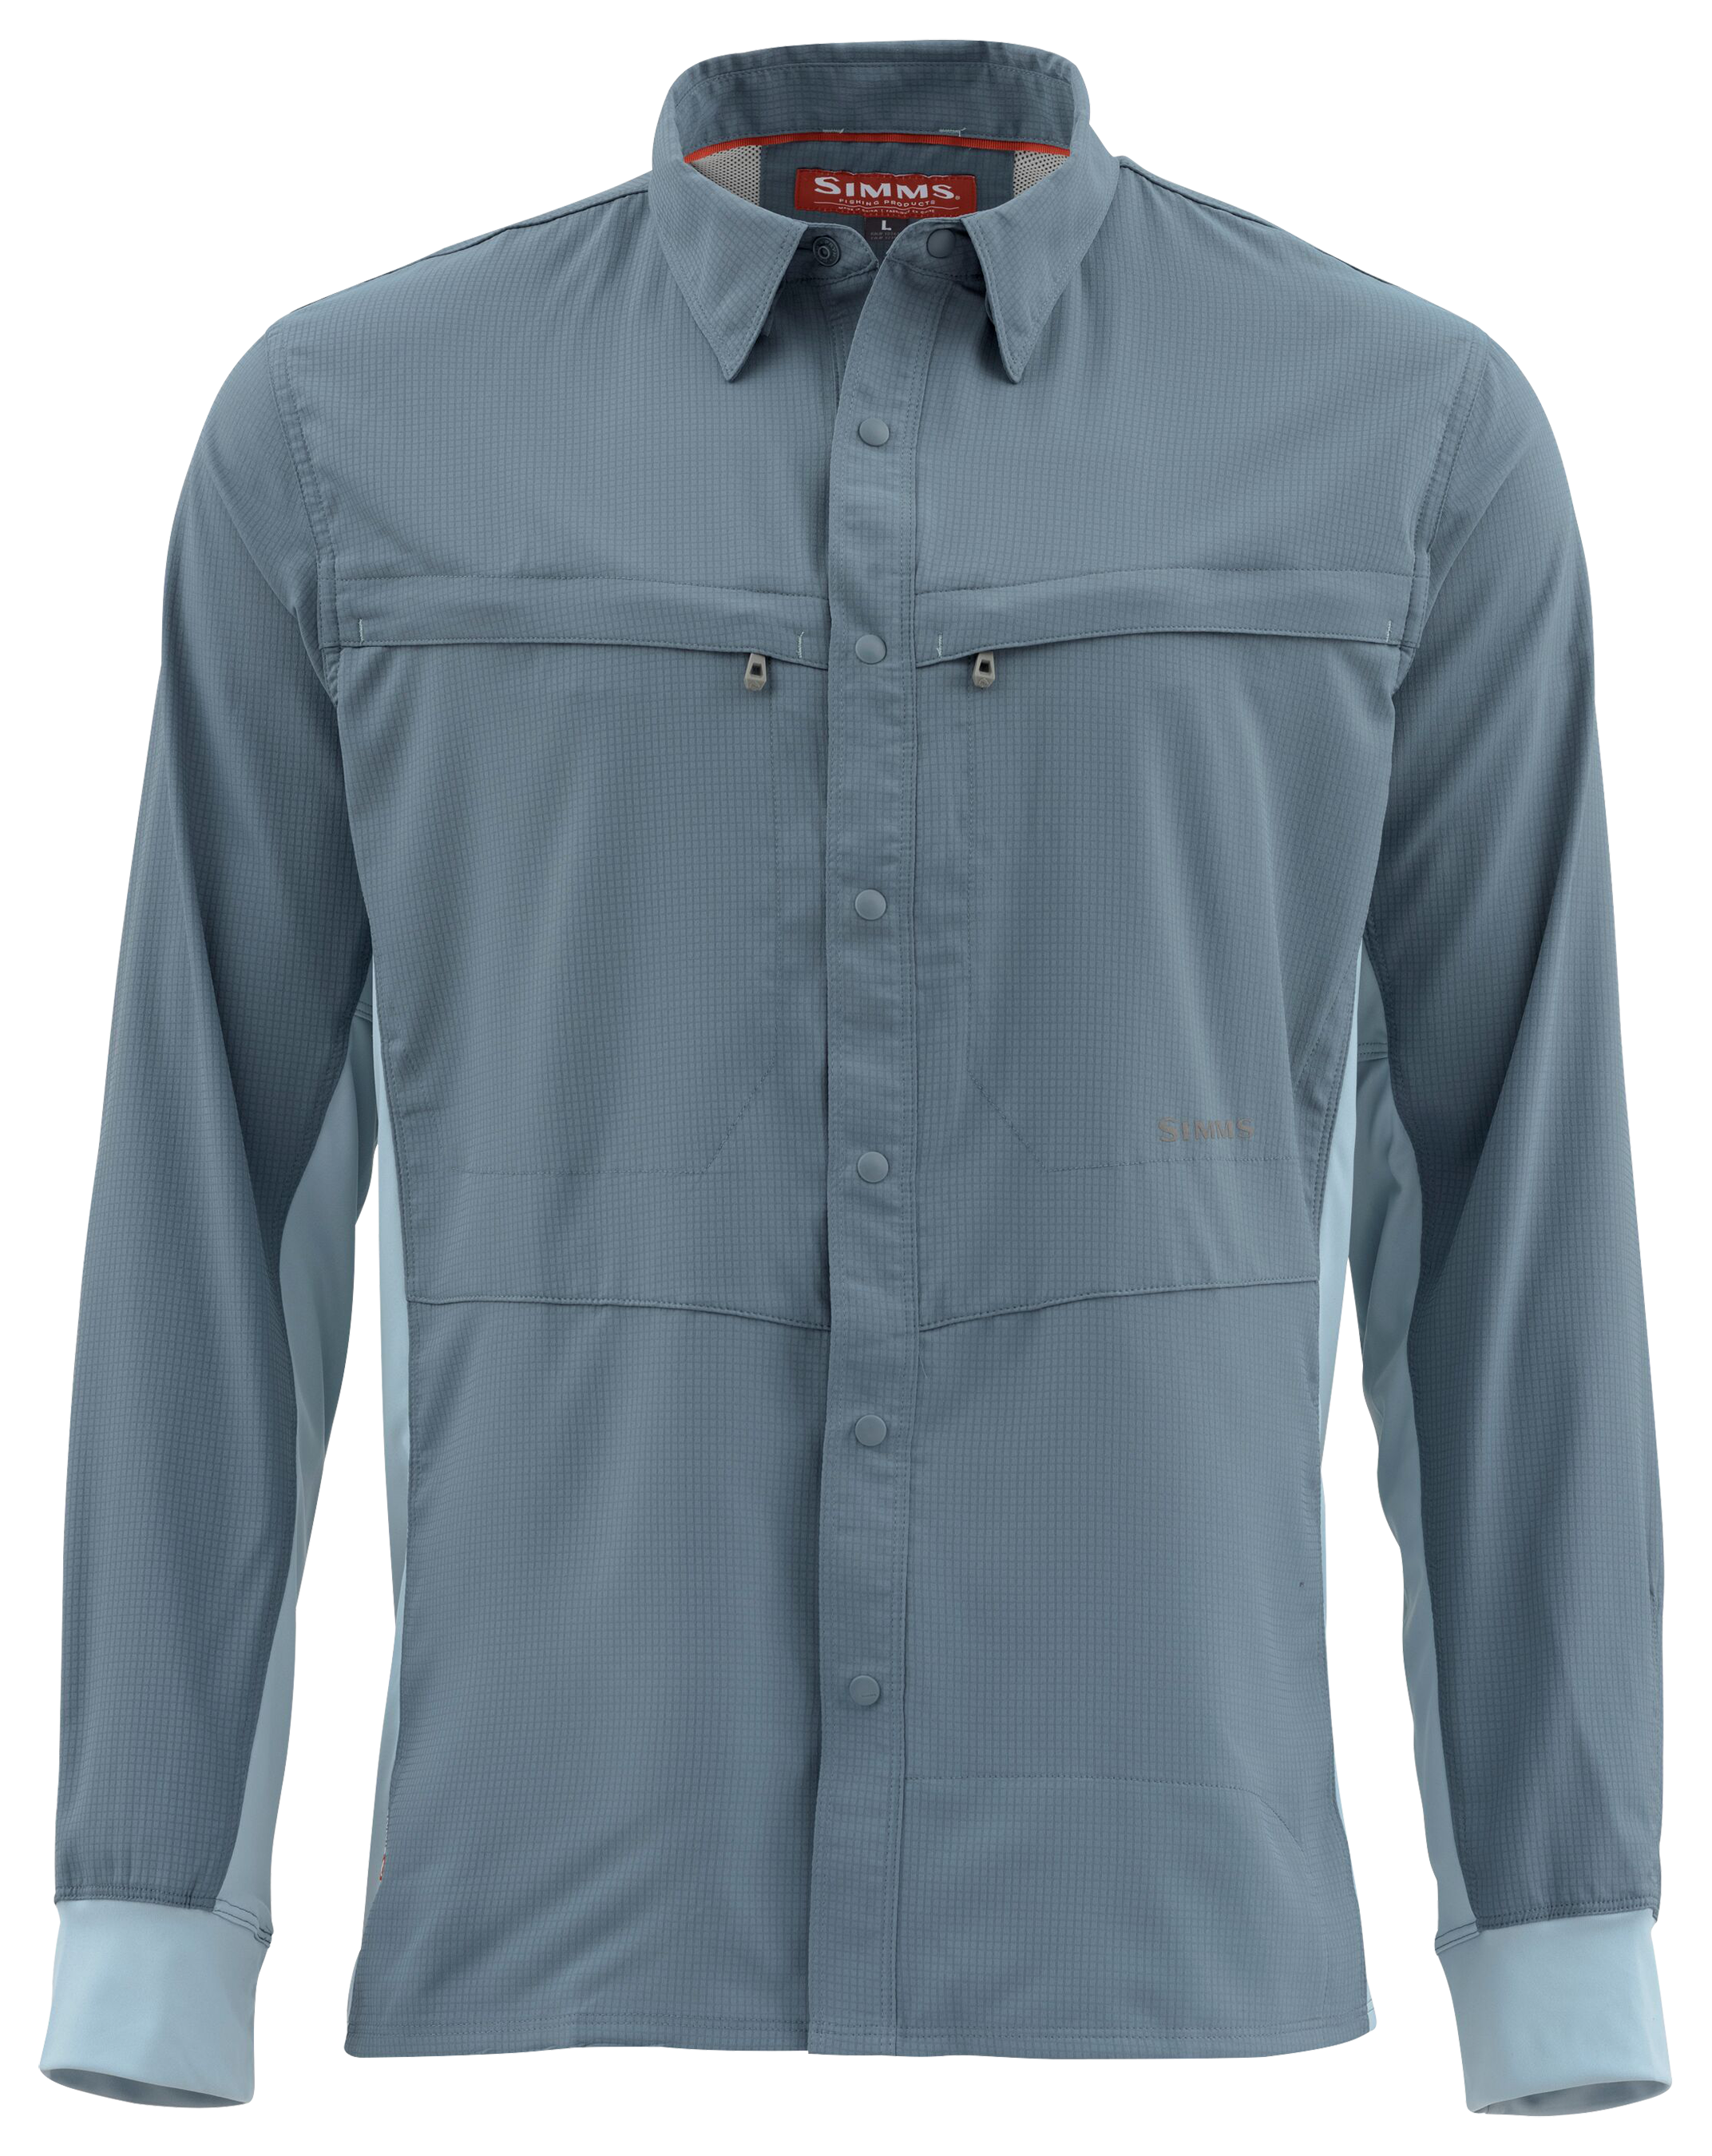 Simms Intruder BiComp Long-Sleeve Fishing Shirt for Men